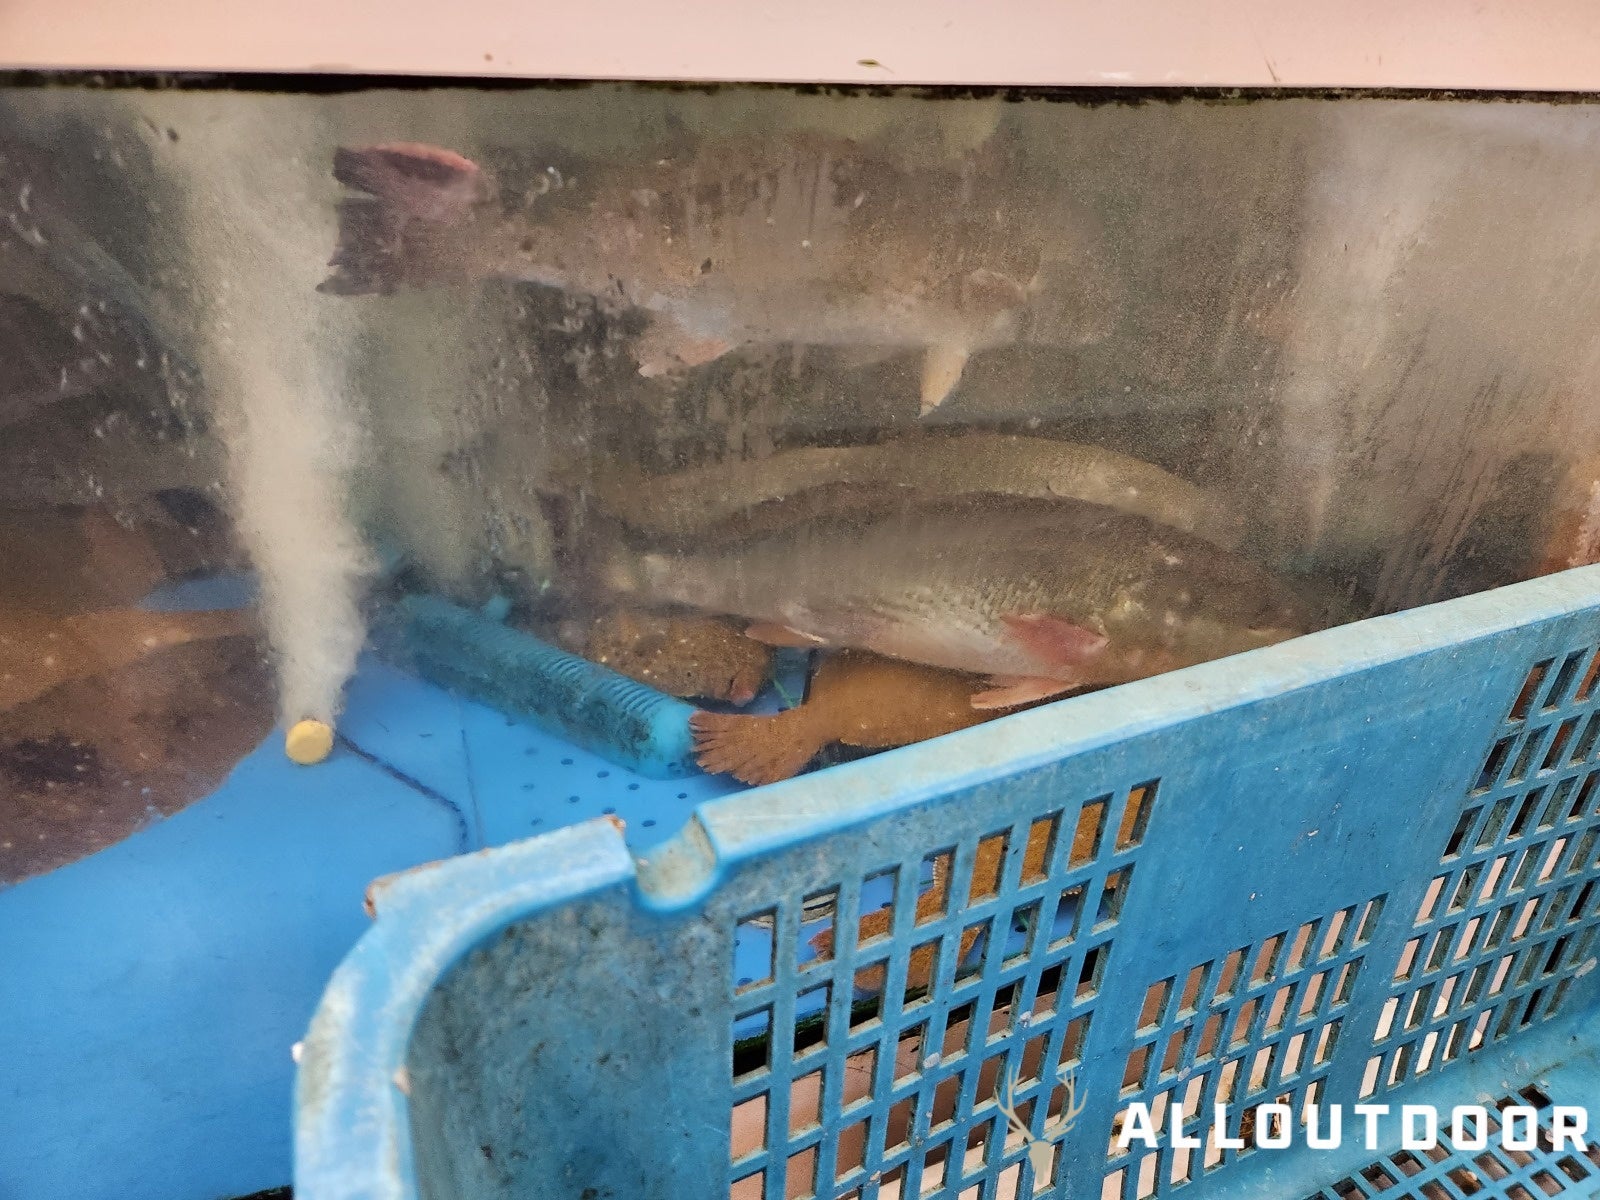 A Day in South Korea – Noryangjin Fish Market